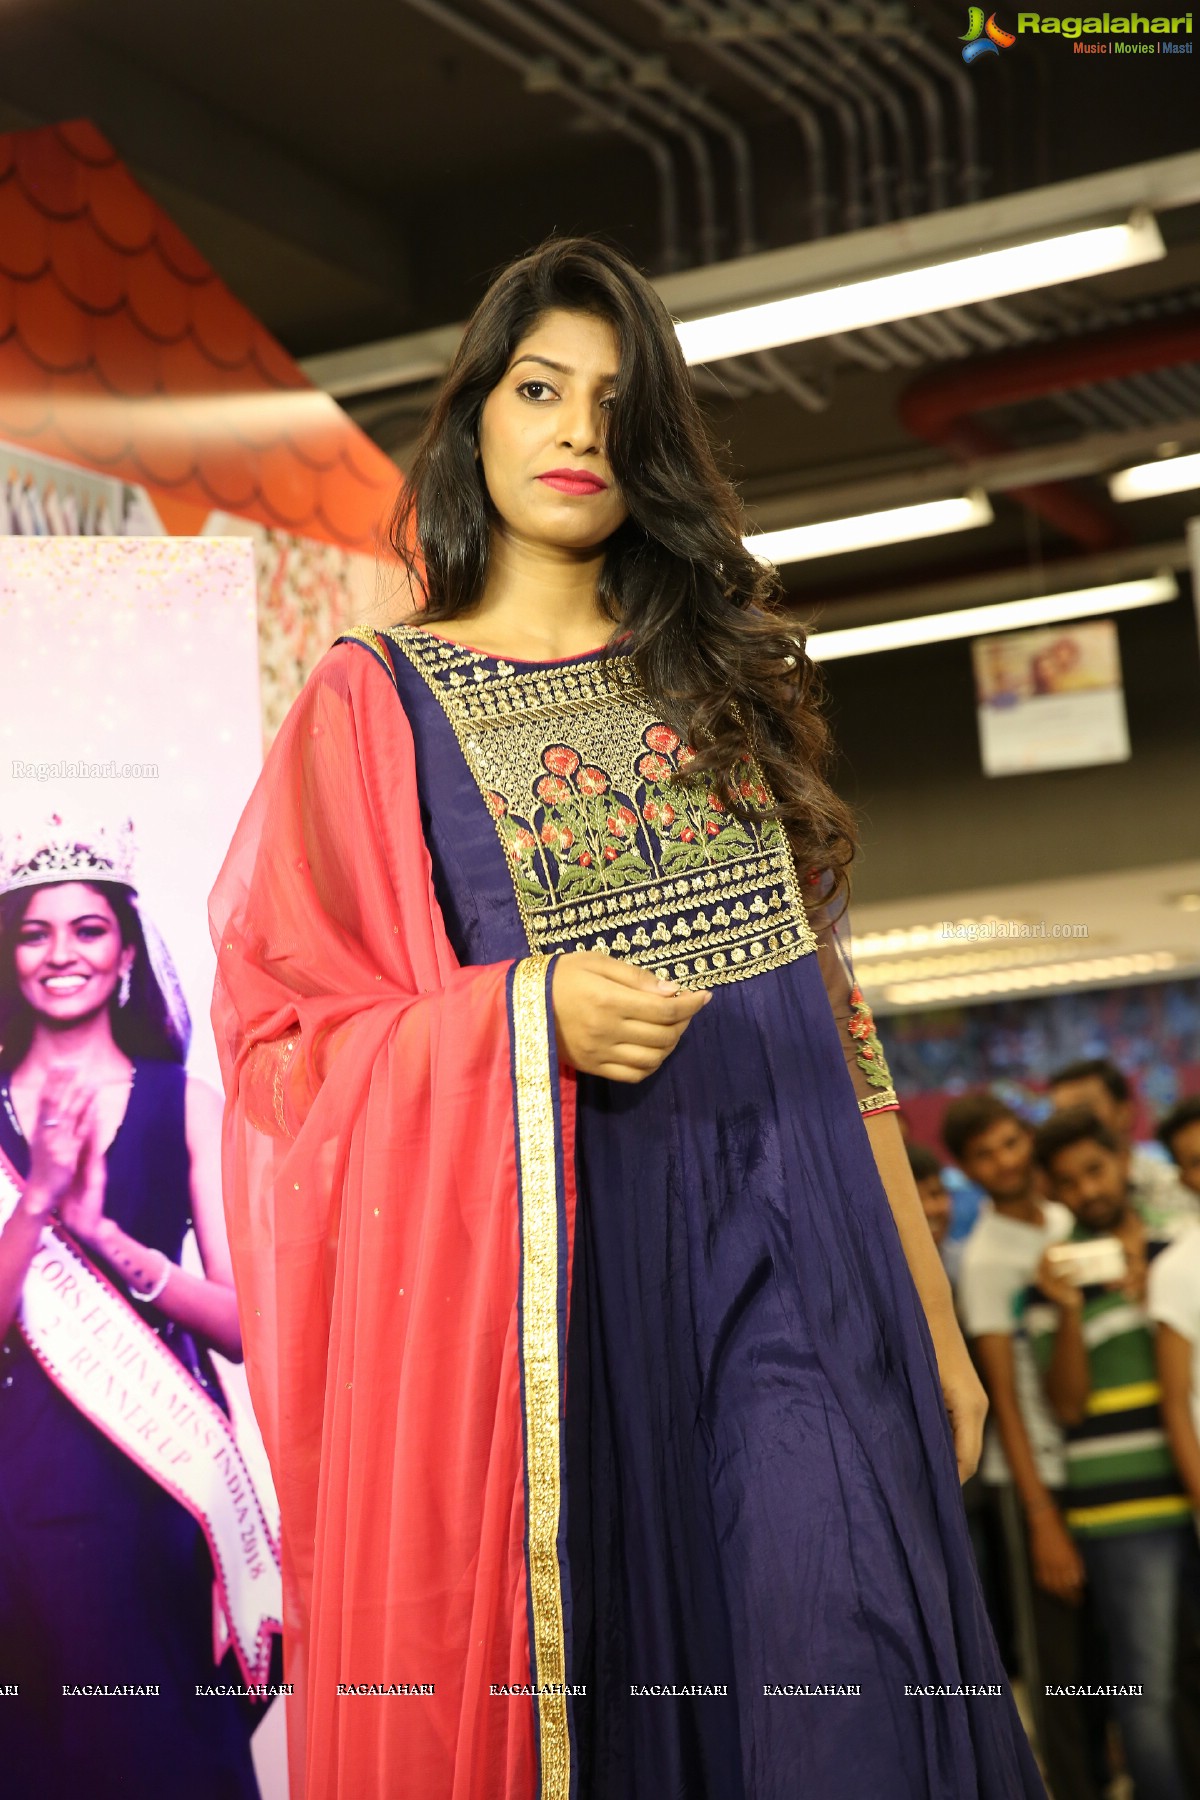 Tete-A-Tete with fbb Colors Femina Miss India 2018 2nd Runner Up Ms Shreya Rao at Big Bazaar, Ameerpet, Hyderabad